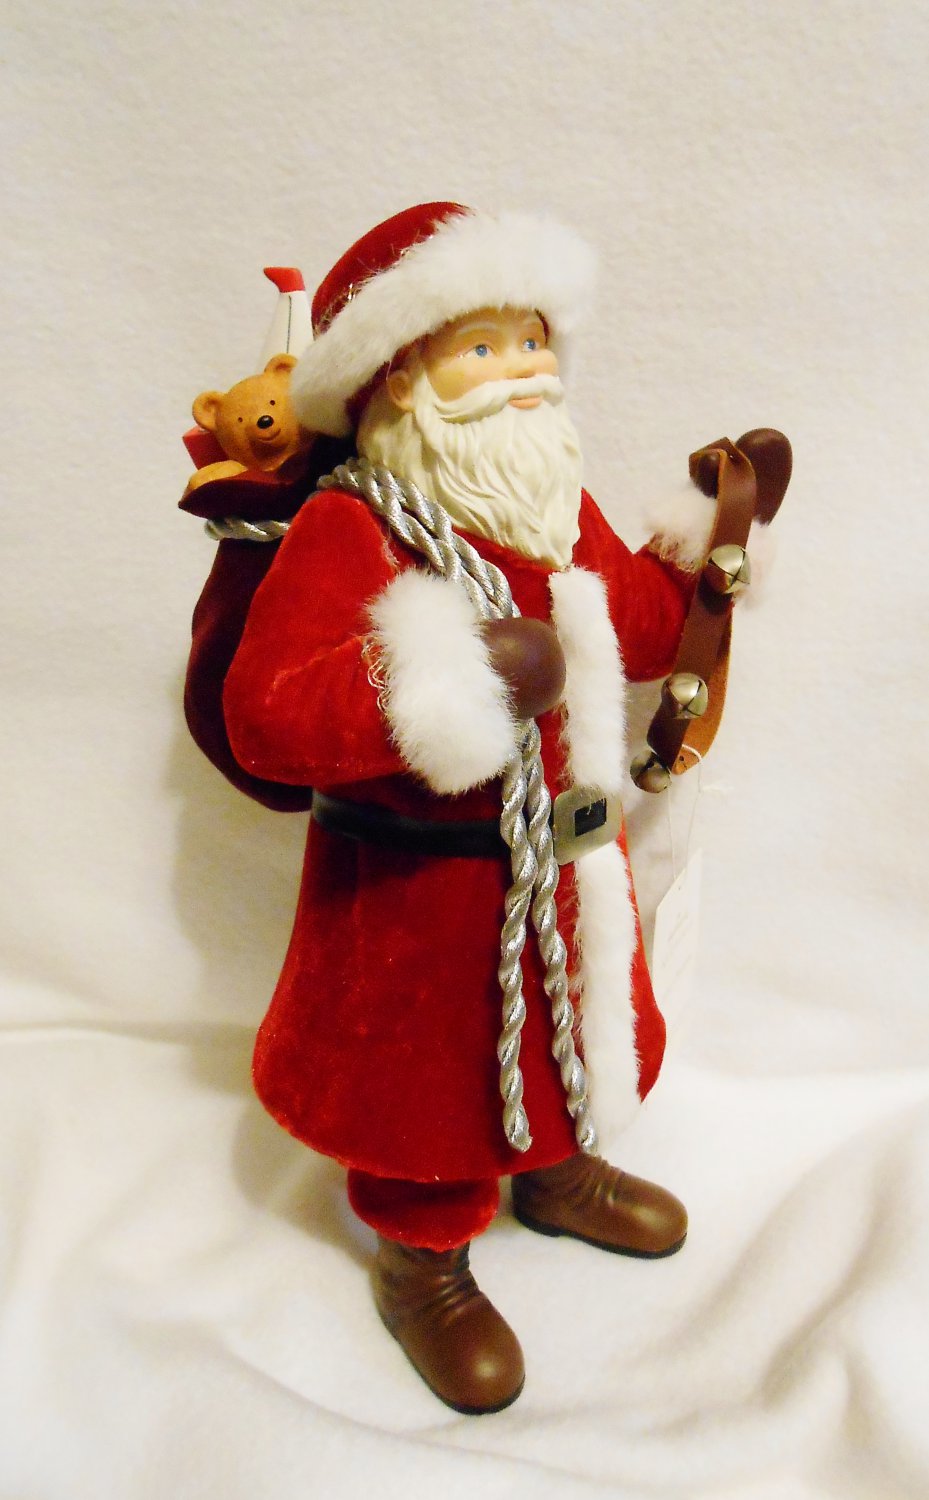 Santa Figure Hallmark "Father Christmas" Large 12" Tall Tabletop Mantel